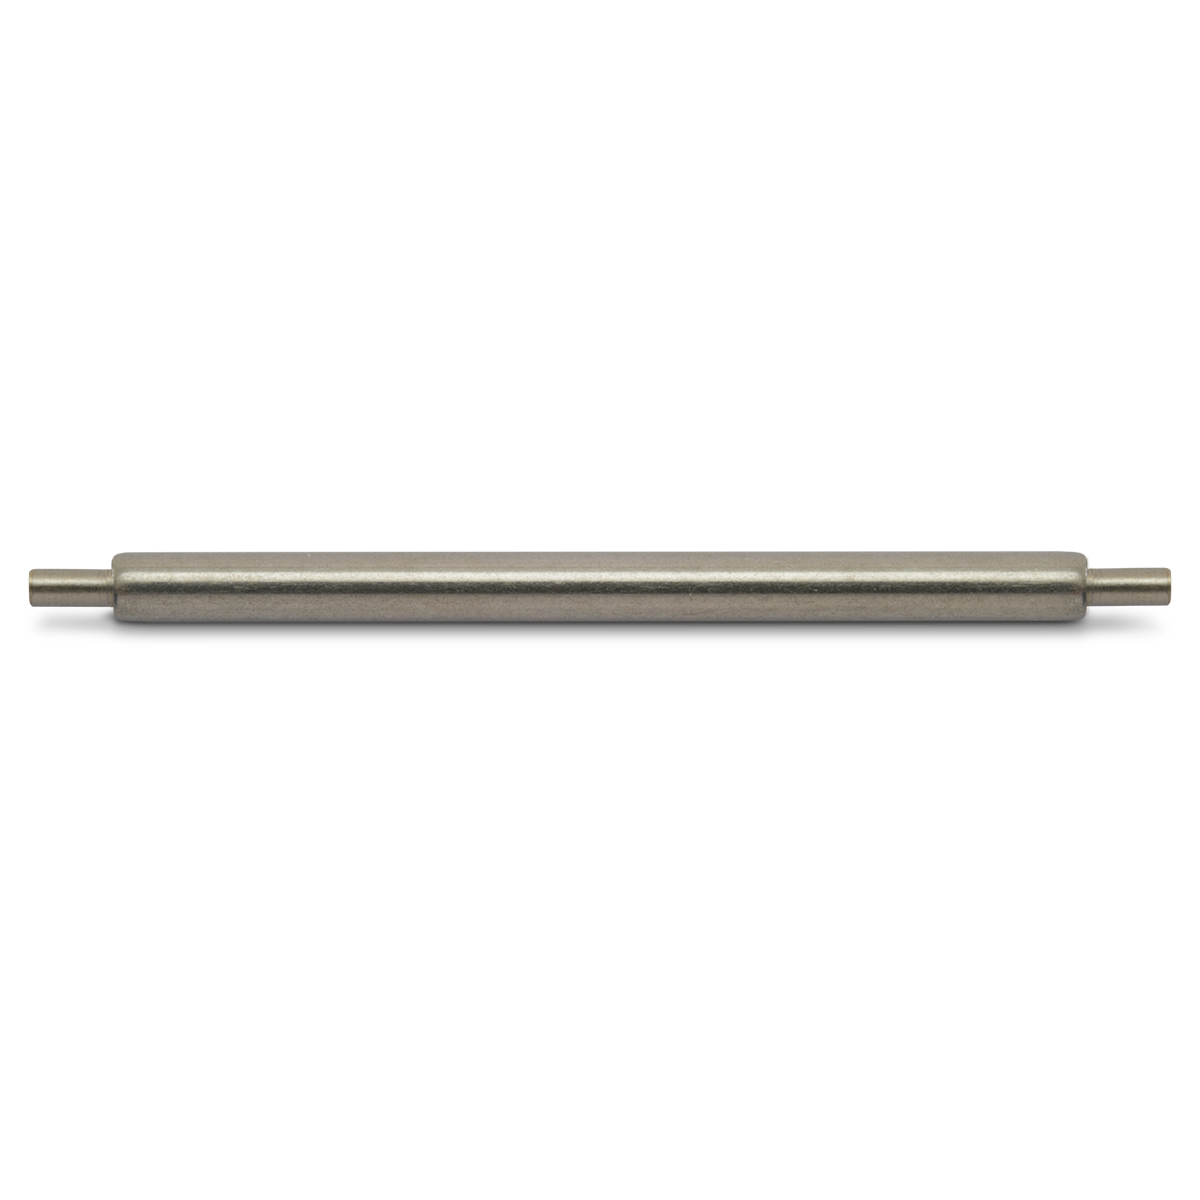 100 Barrettes en acier inox, sans ergots, tuyau Ø 1,0 mm, pivot Ø 0,6 mm, longueur 20 mm,  extra fin